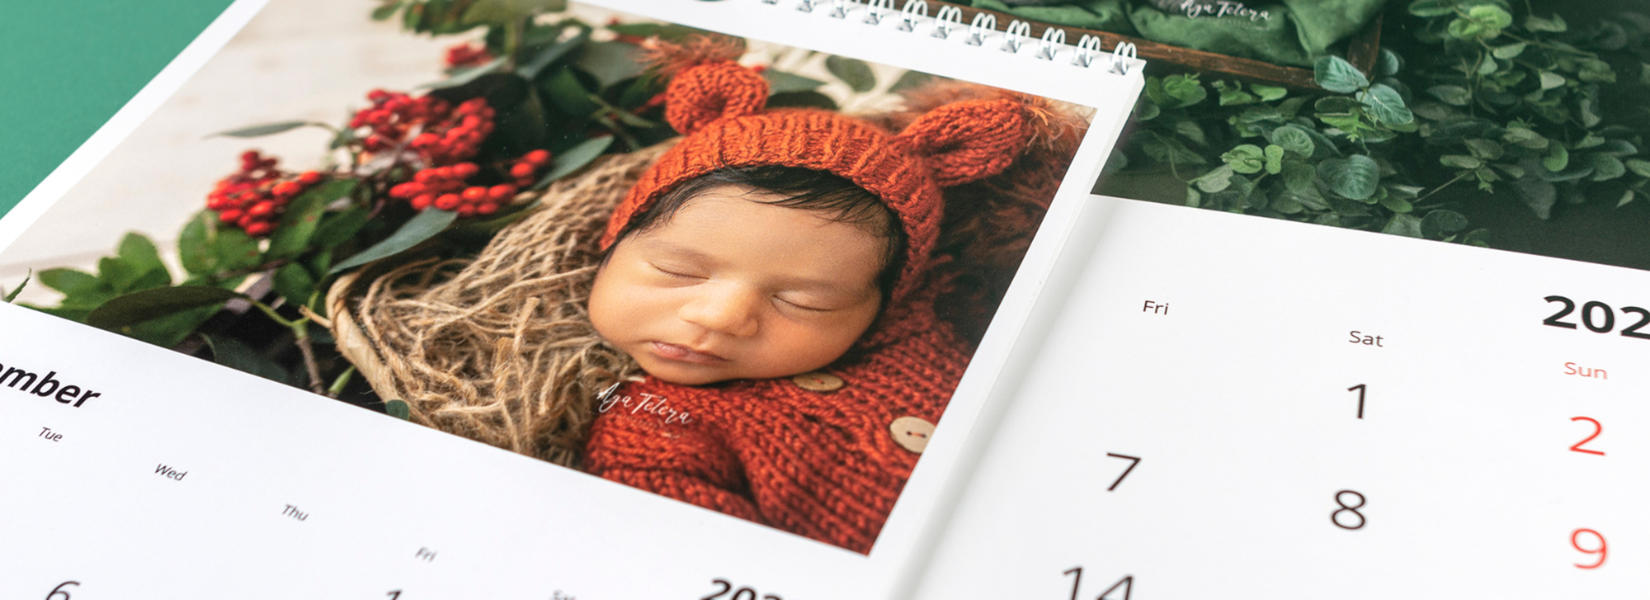 Calendar basic photo calendar professional print nphoto